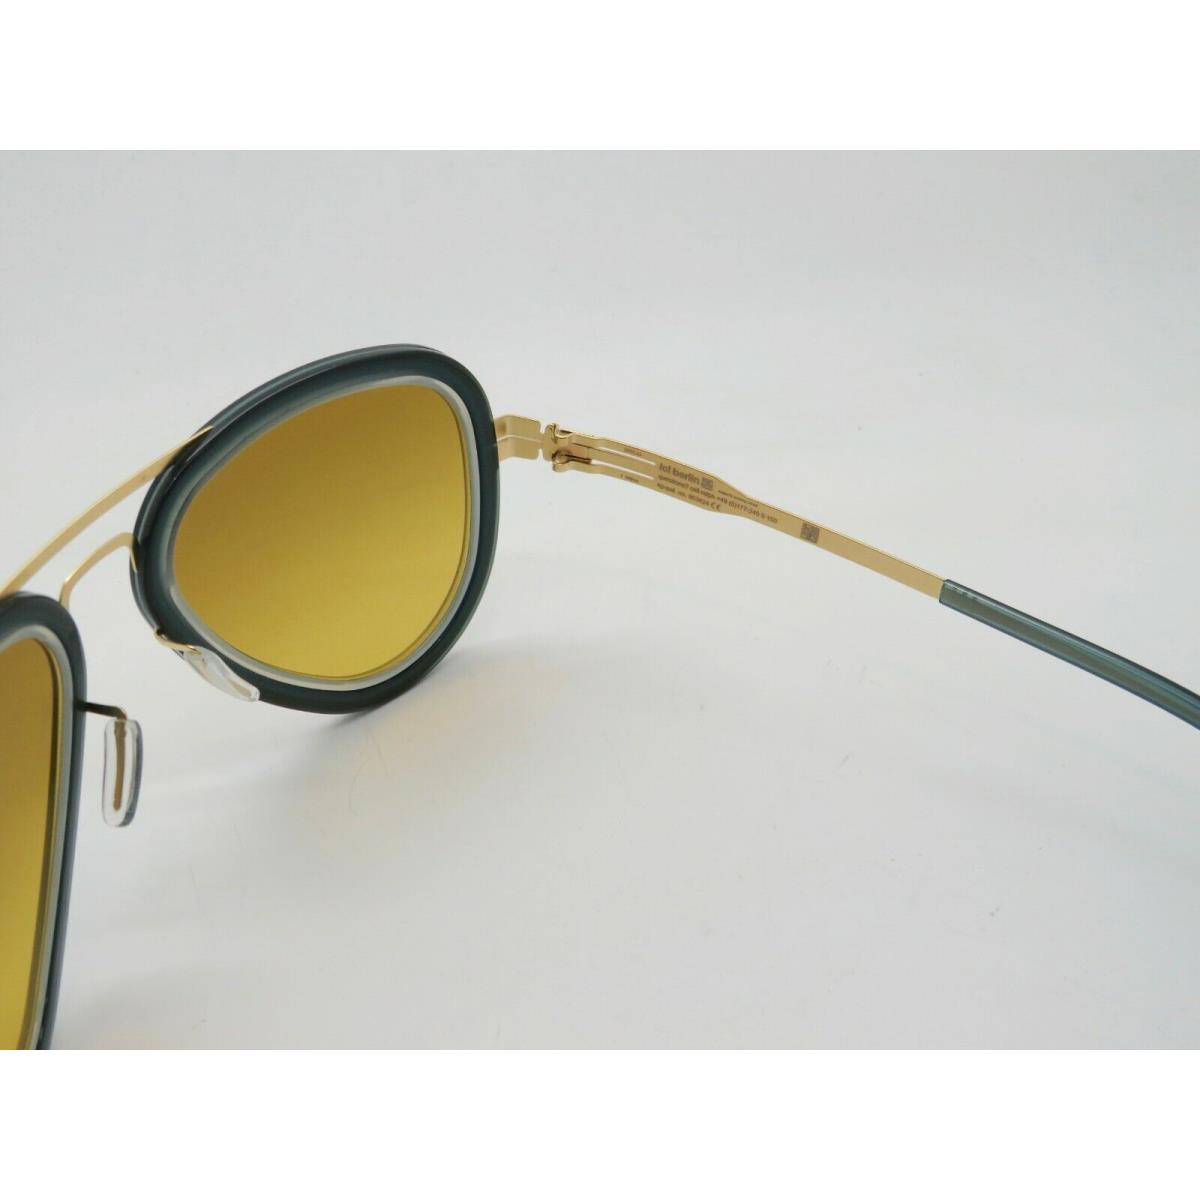 ic! berlin sunglasses Rinaldo - Frame: Matte Gold/Rocket Fuel, Lens: Yellow Dust Mirrored 3